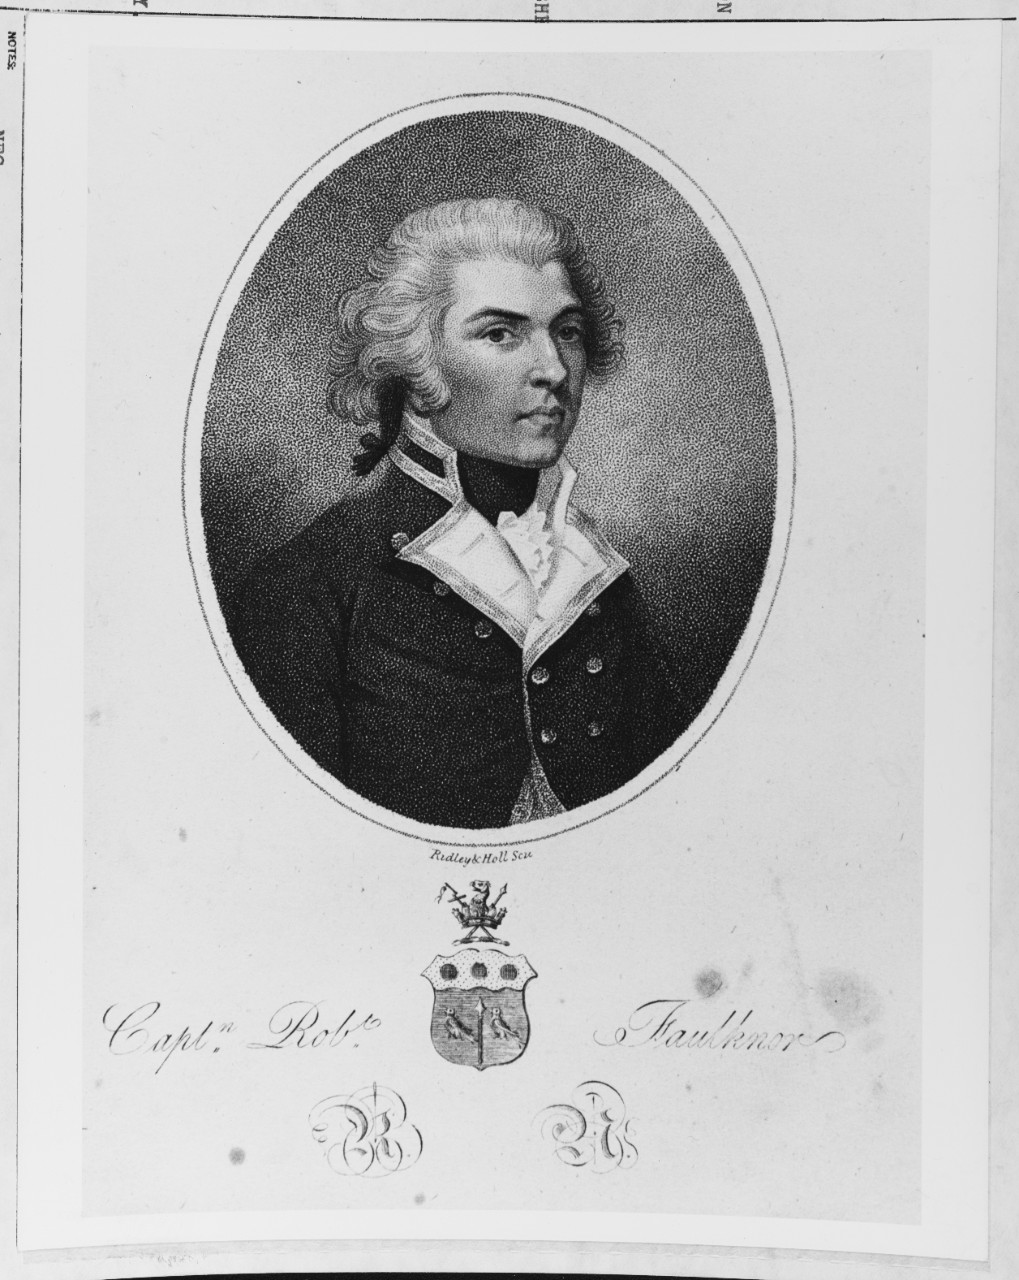 Robert Faulknor ( 1763 - 1795) British Navy Captain.